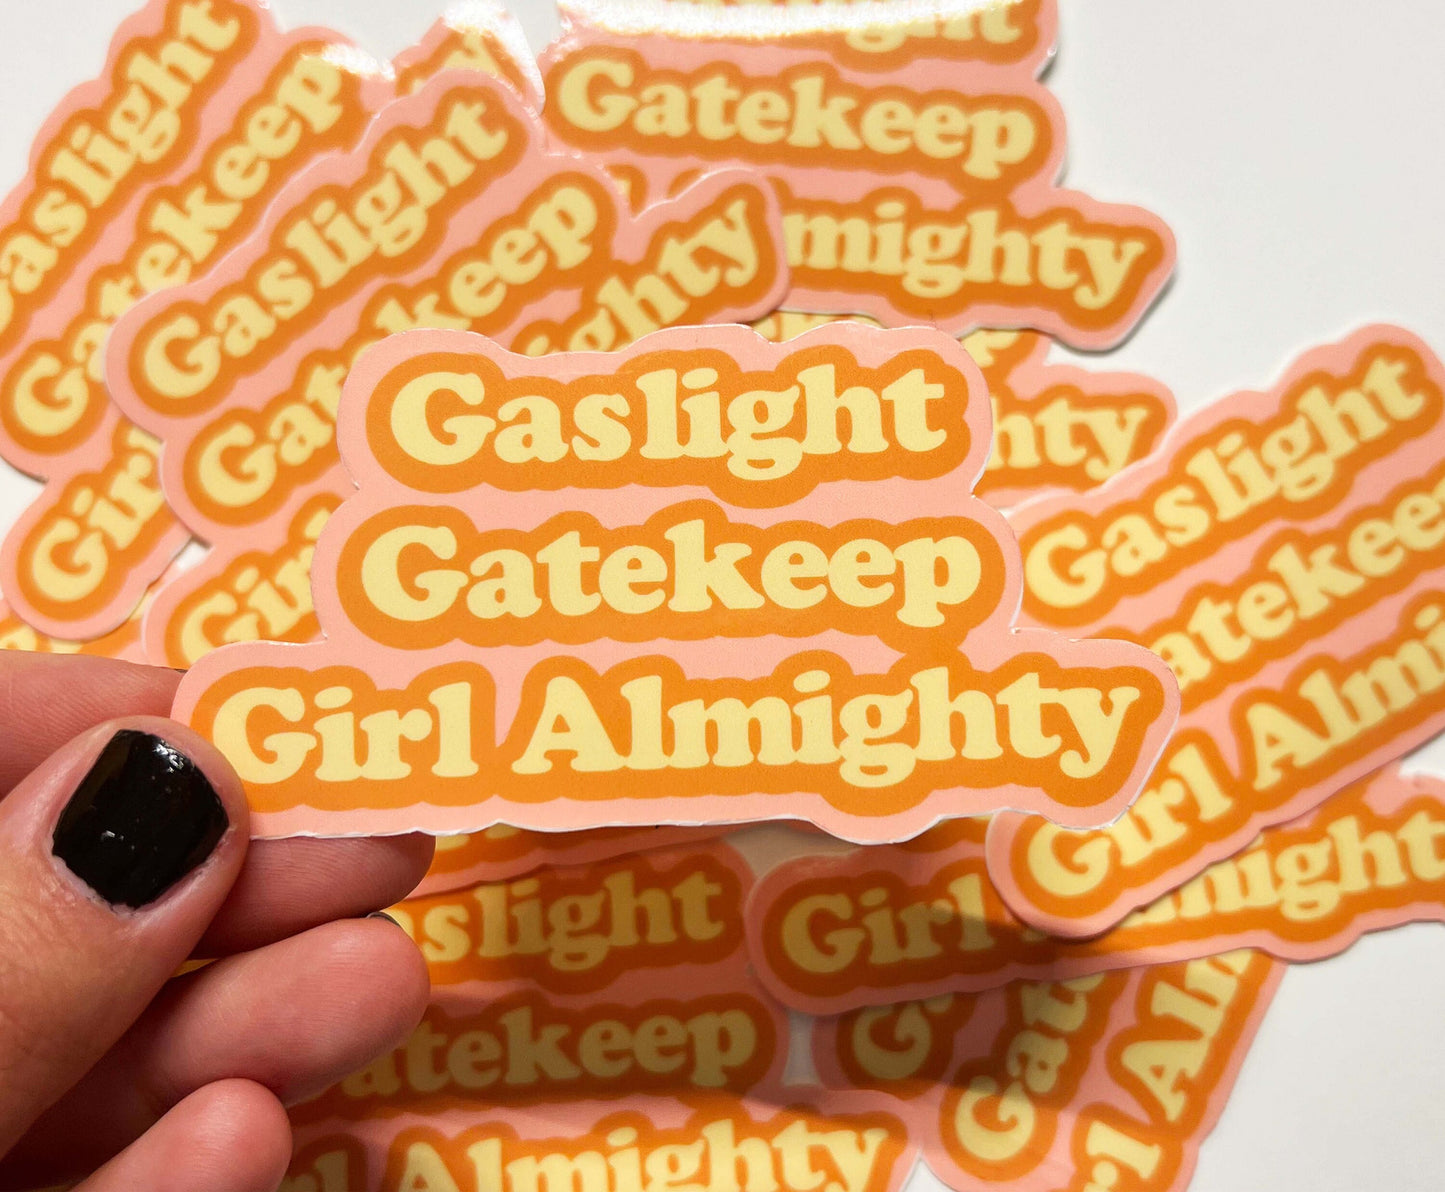 One Direction Sticker, Gaslight. Gatekeep. Girl Almighty, 1D Song Lyrics: 3.5 x 1 .75 inches